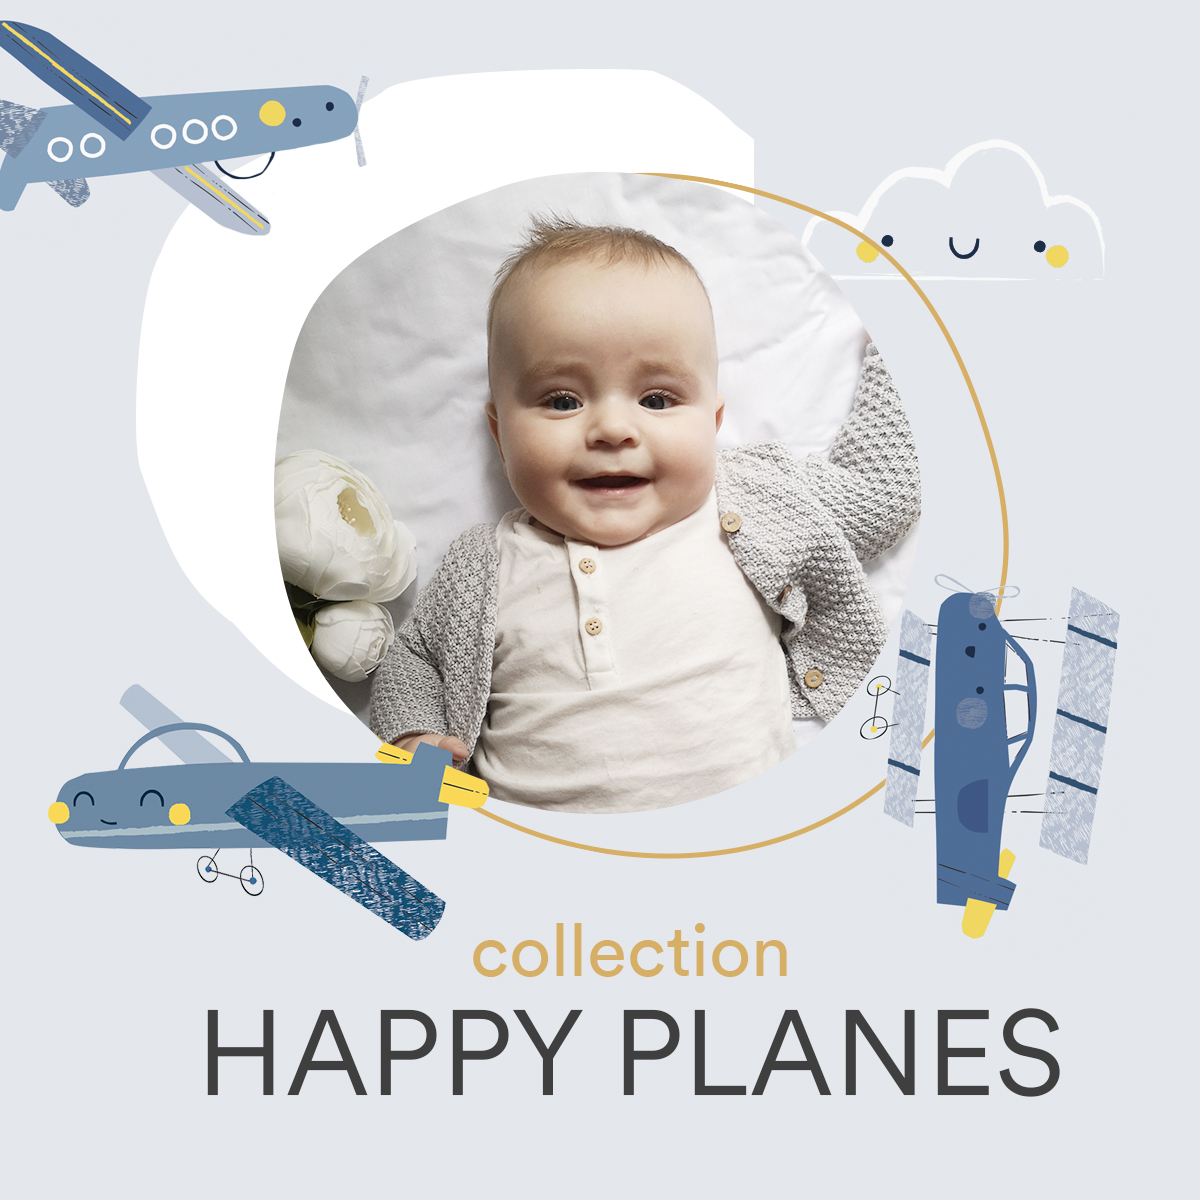 Happy planes